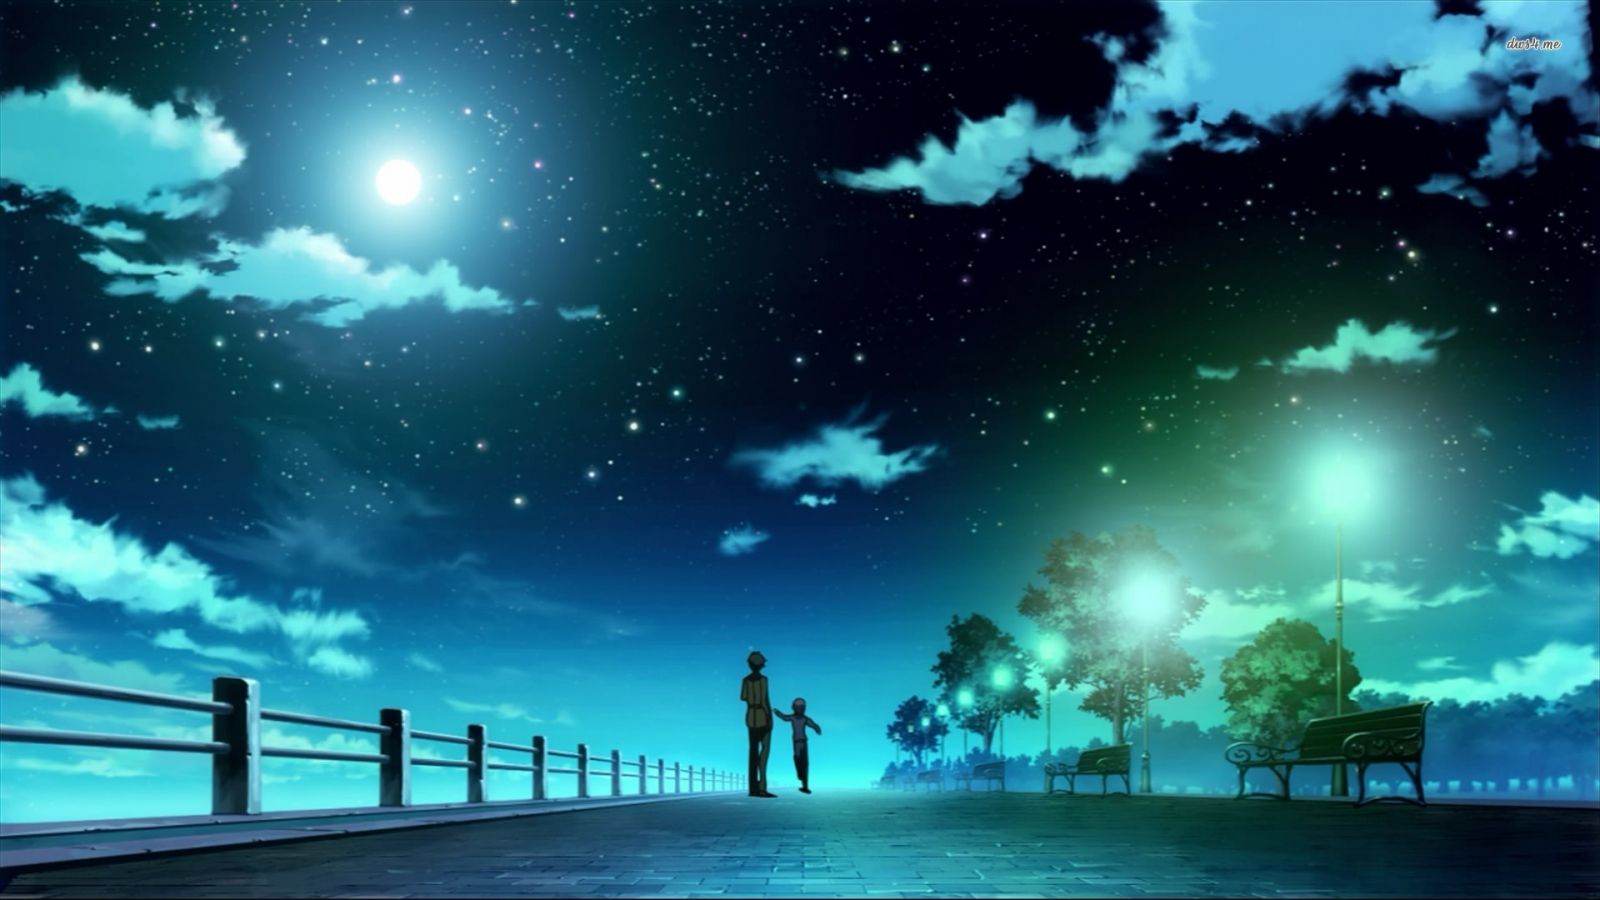 Free download Anime Starry Night Sky .wallpaperafari.com